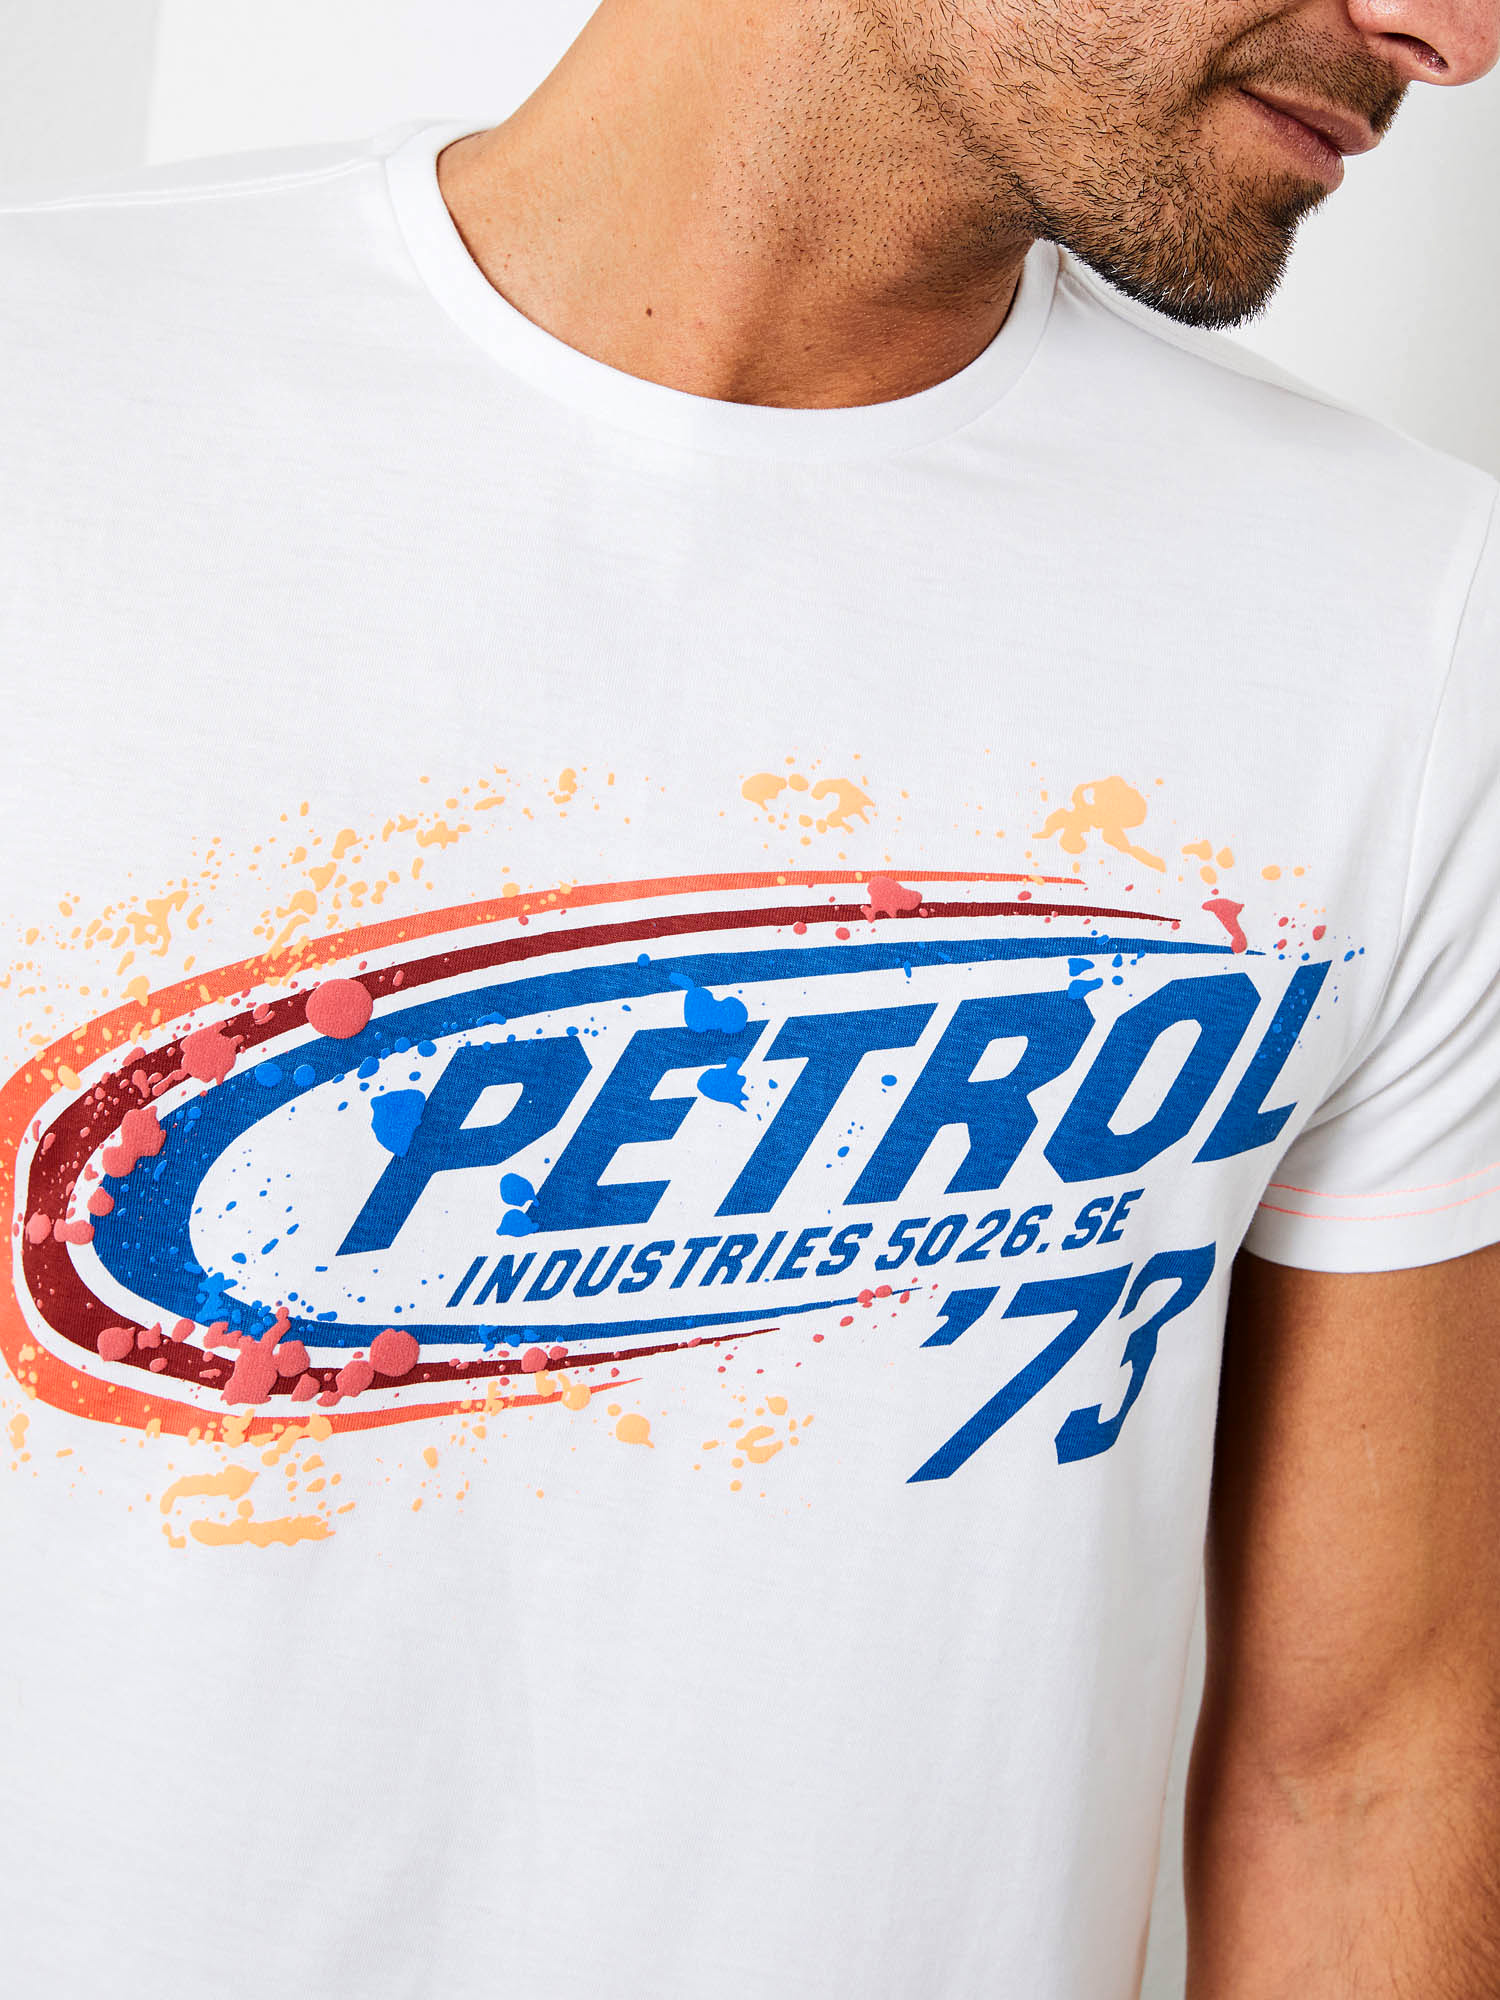 Artwork Petrol Bright J Menswear - Style Industries White T-shirt